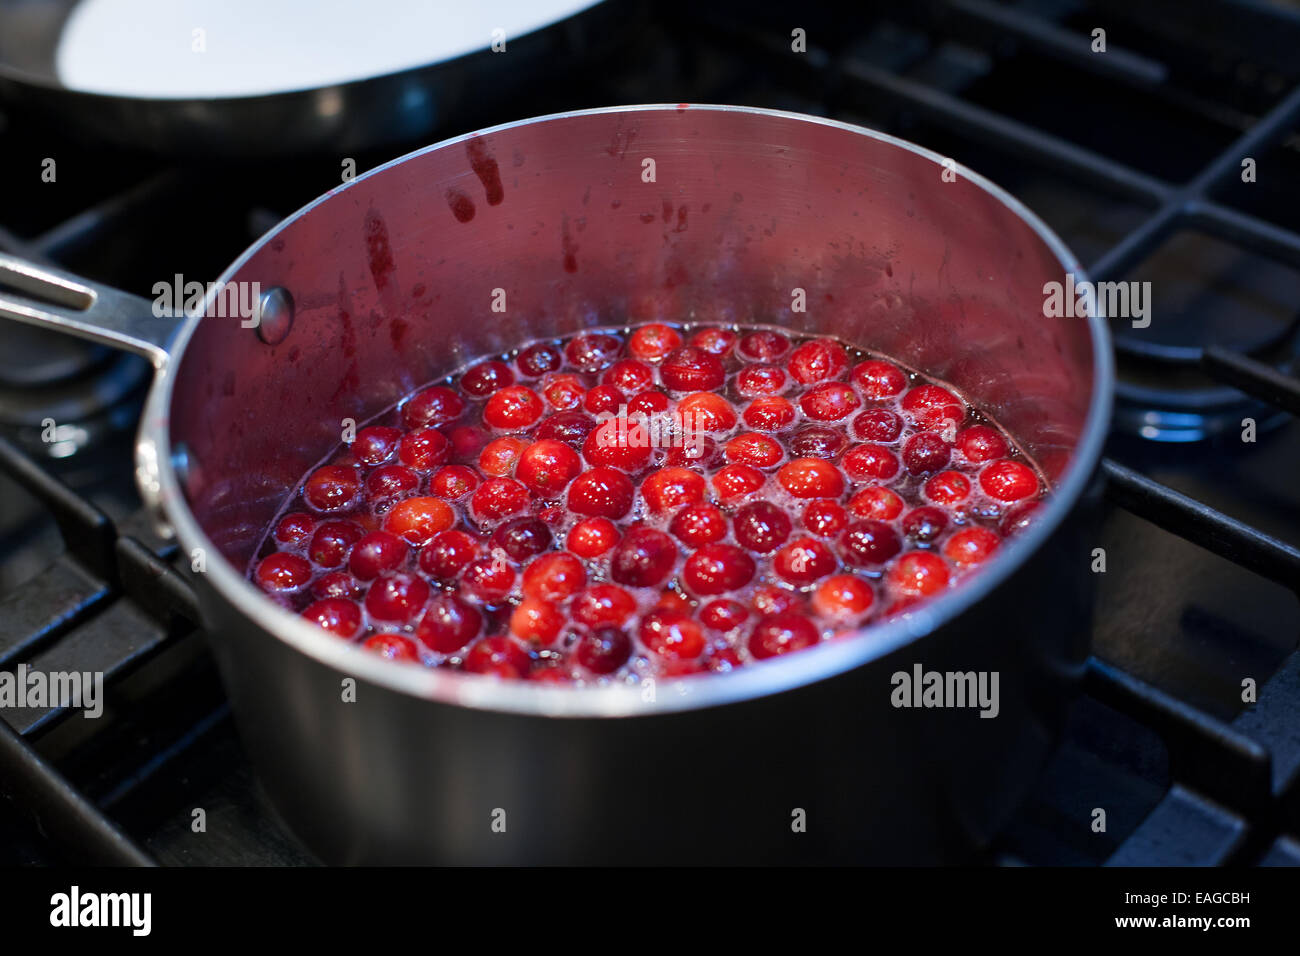 Mirtilli rossi freschi per la cottura su una stufa Foto Stock